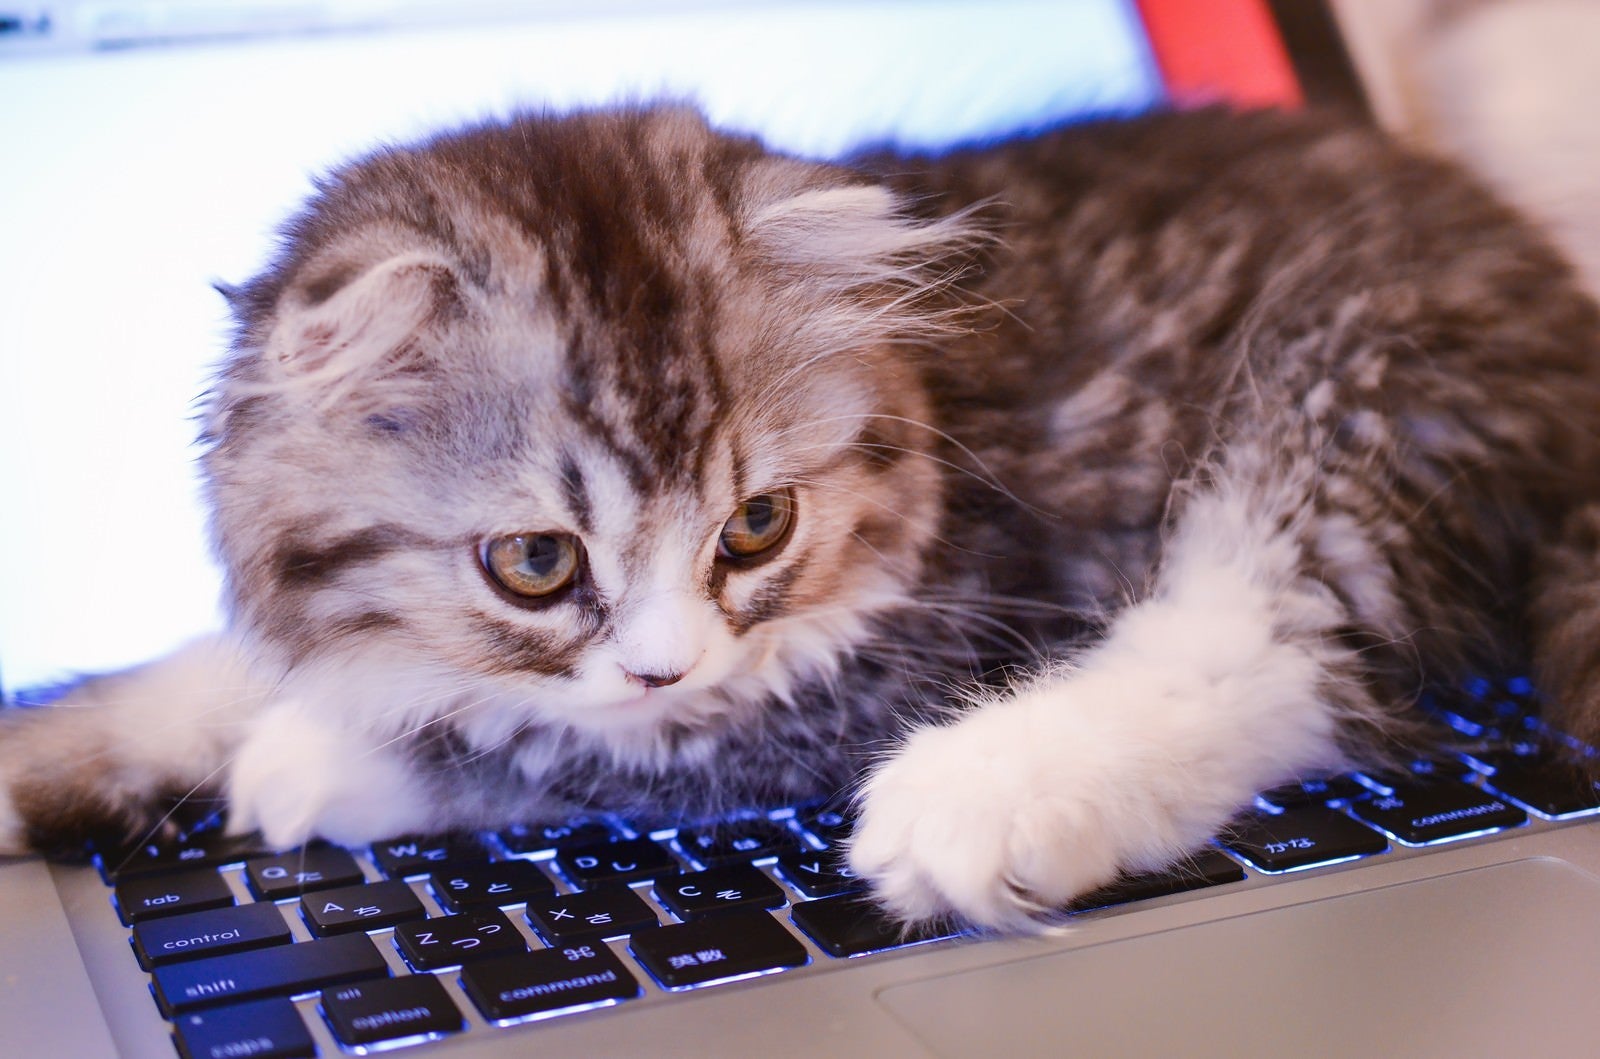 「MacBookのキーボードを占拠してるオス猫（スコティッシュフォールド）」の写真